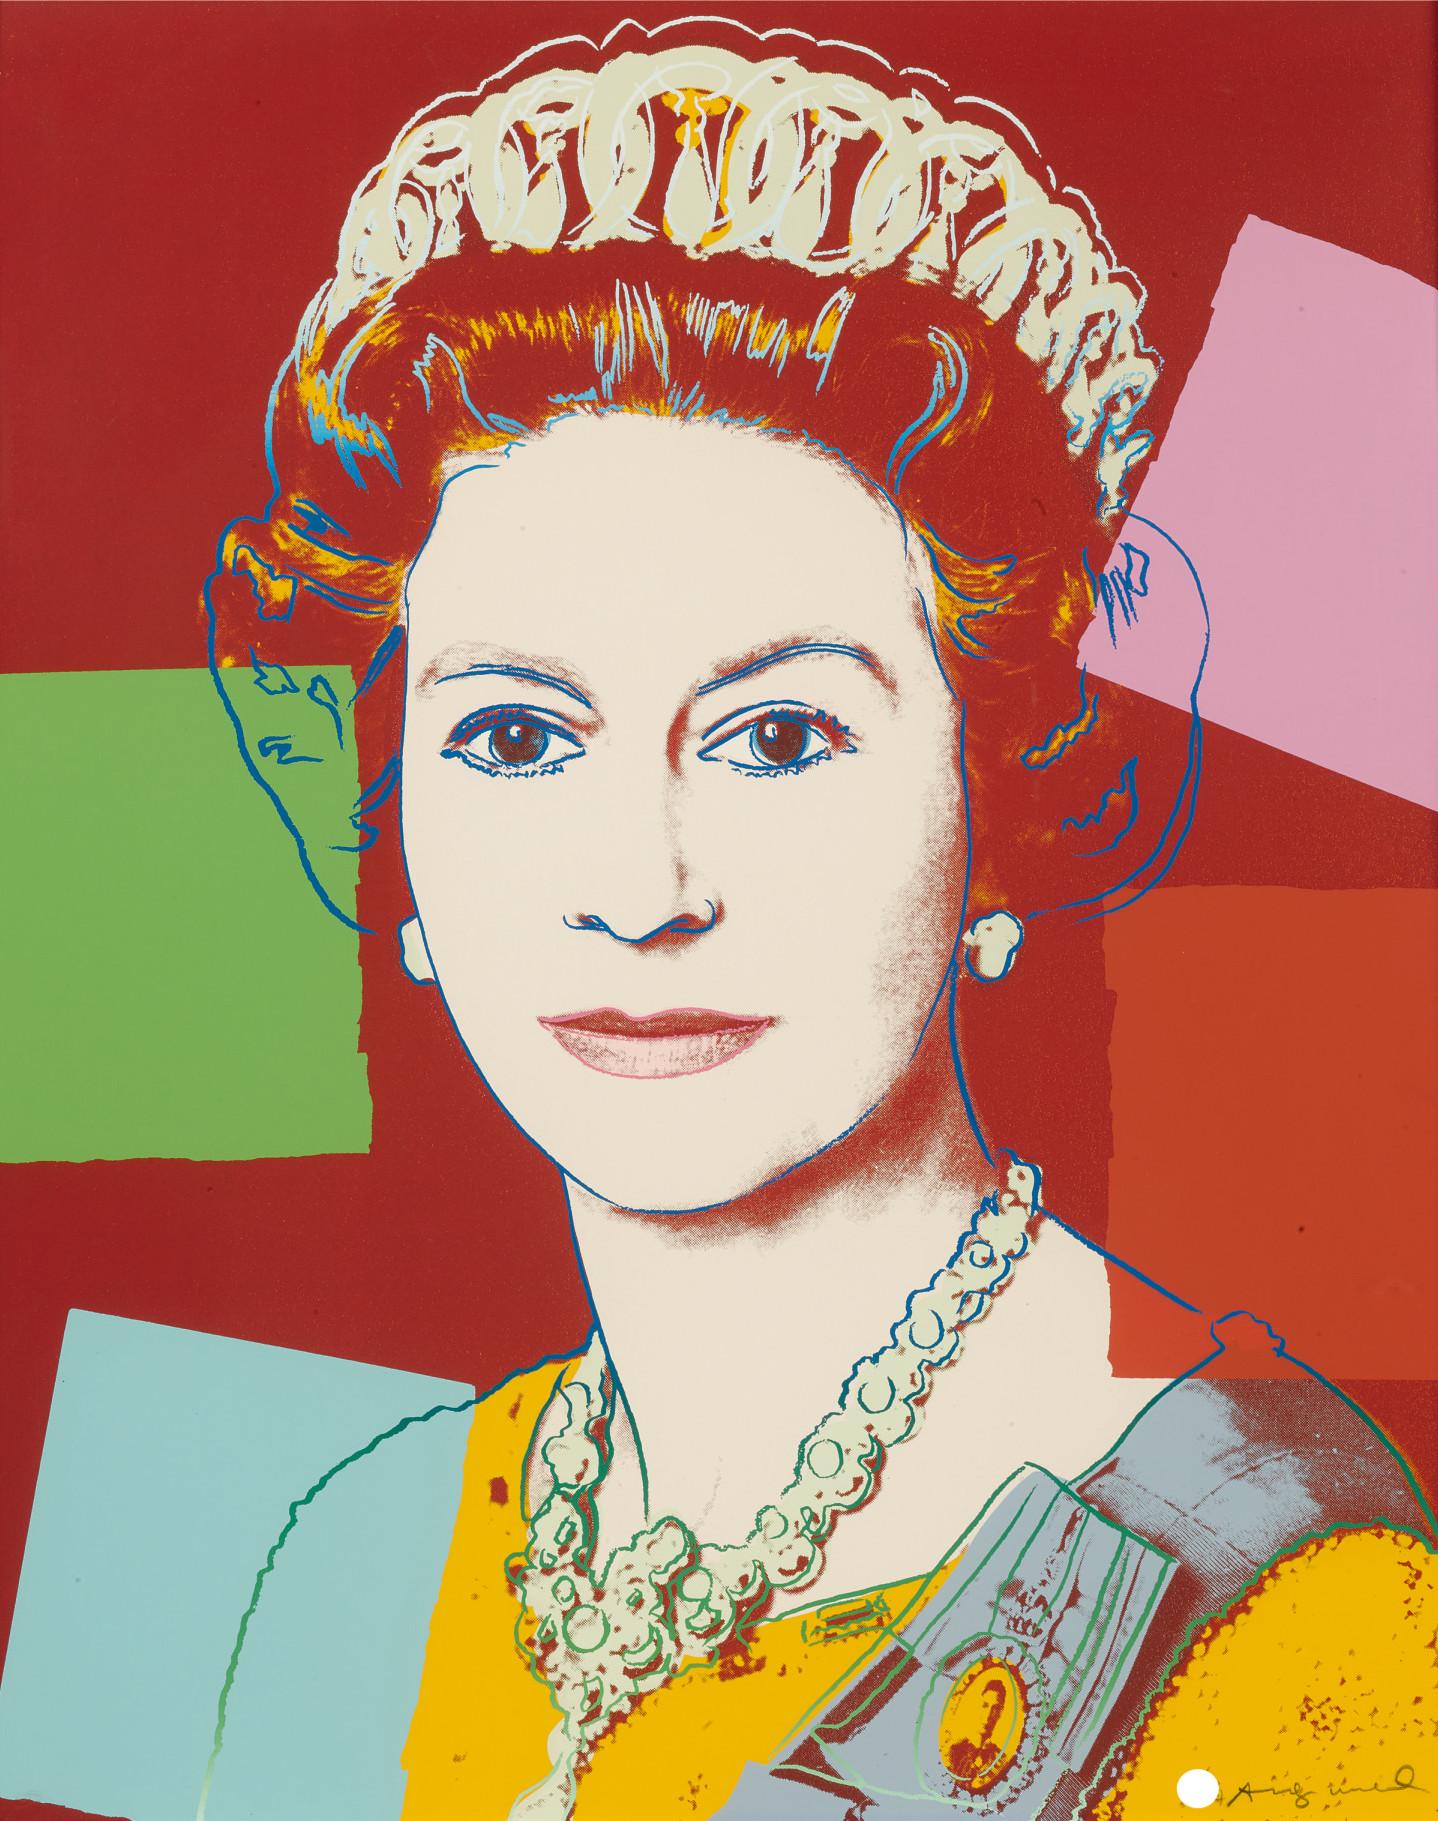 Andy Warhol Portrait Print - Queen Elizabeth II of the United Kingdom (II.334)